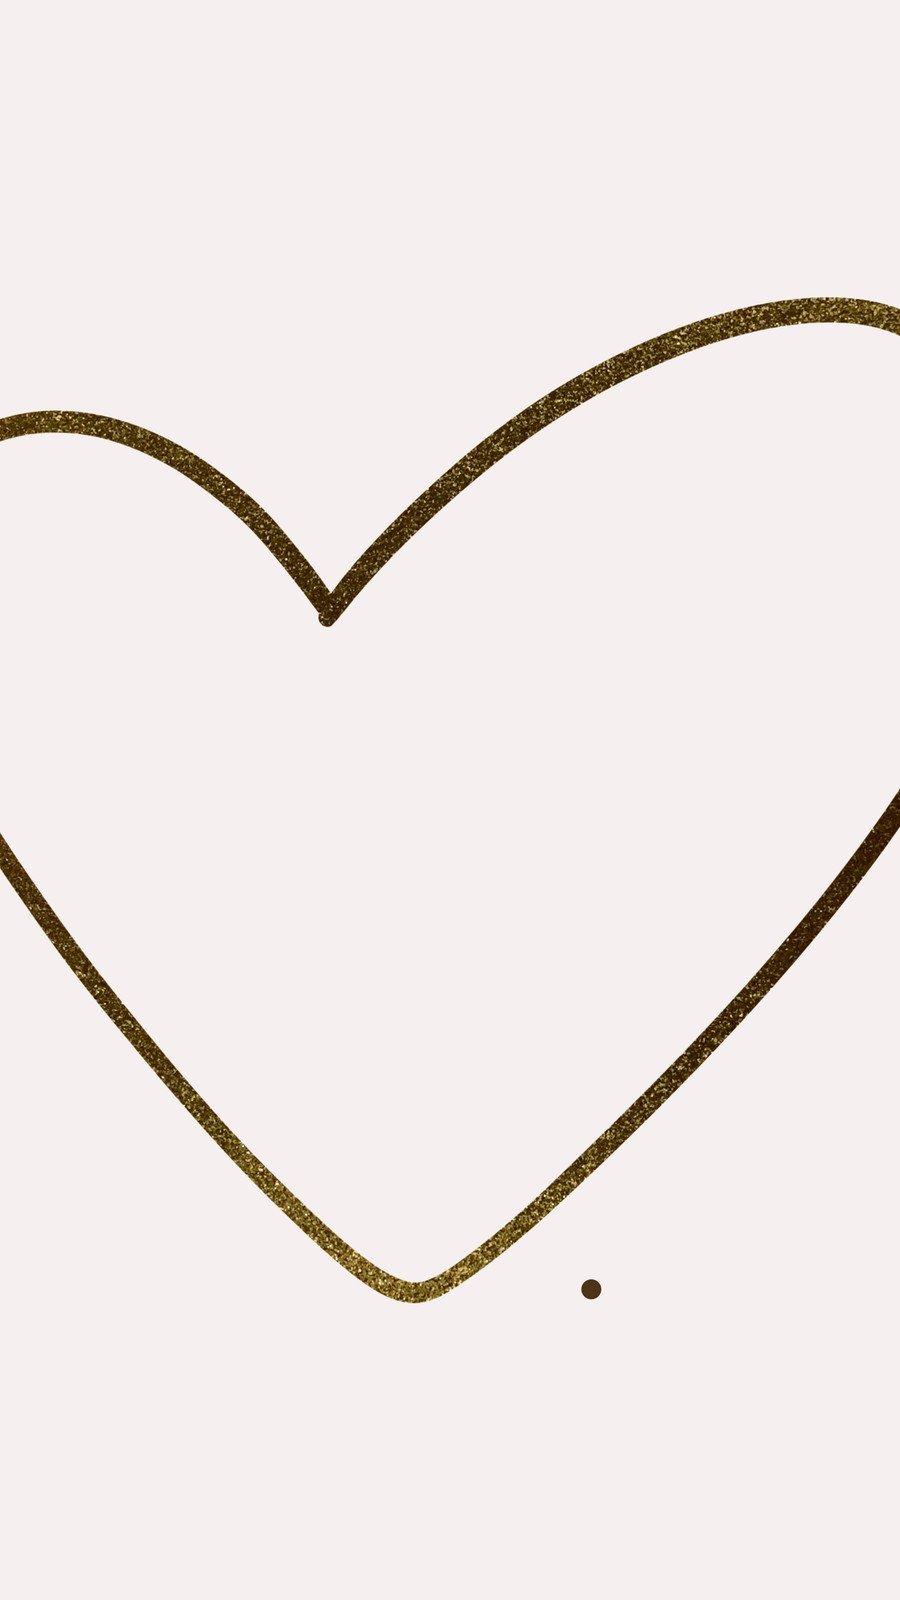 Heart WallpaperAmazoninAppstore for Android